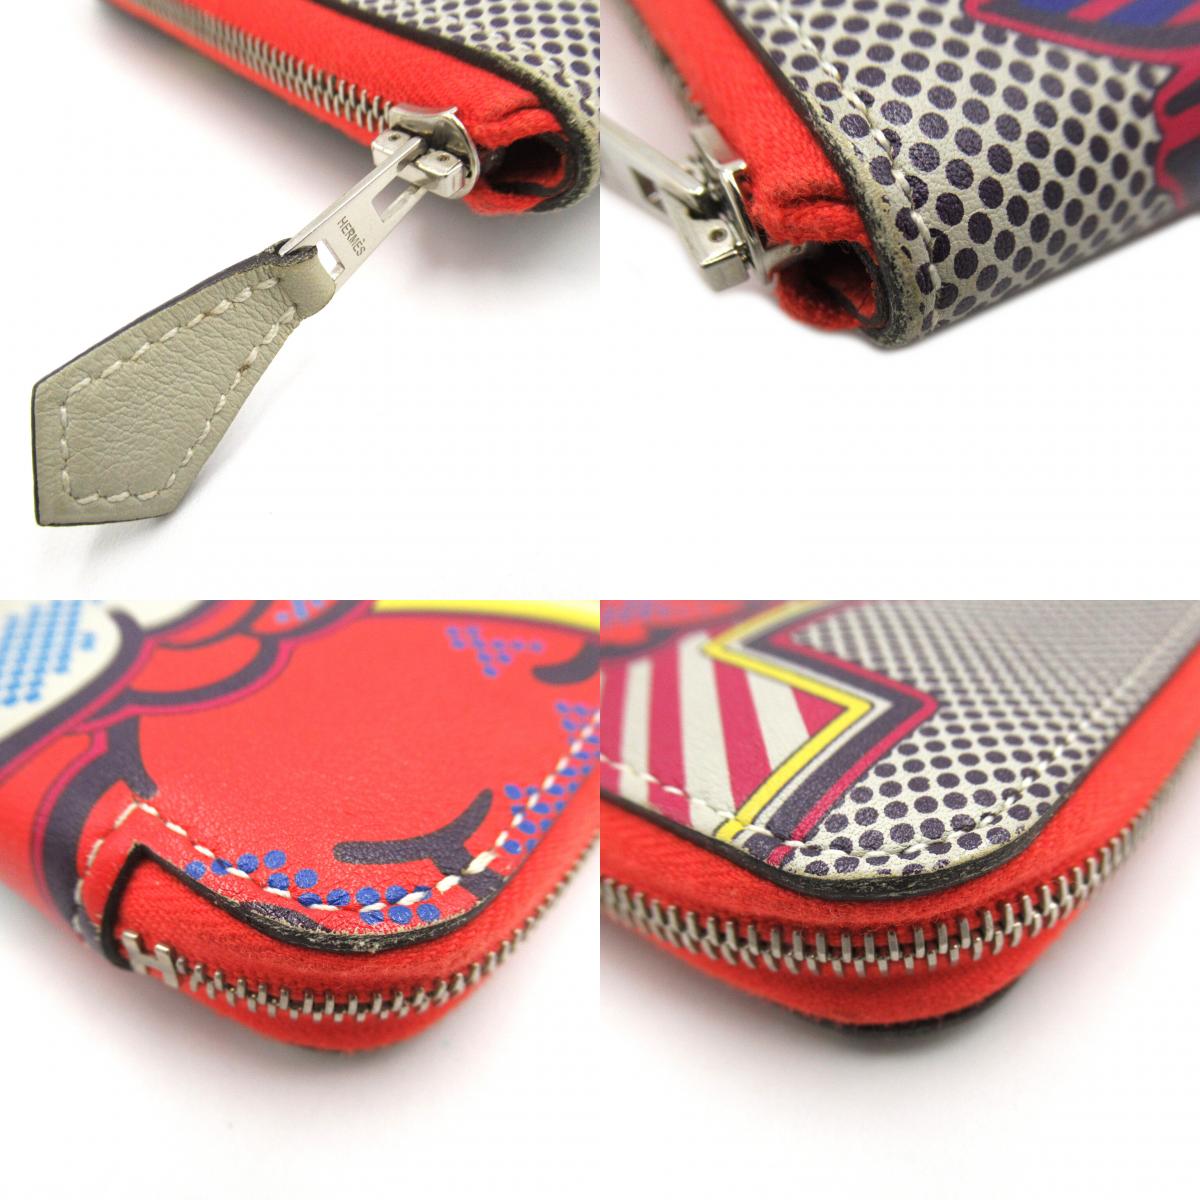 Hermes Asaplong Pegasup Round Long Wallet Wallet Leather Vossyft   Multi-Color